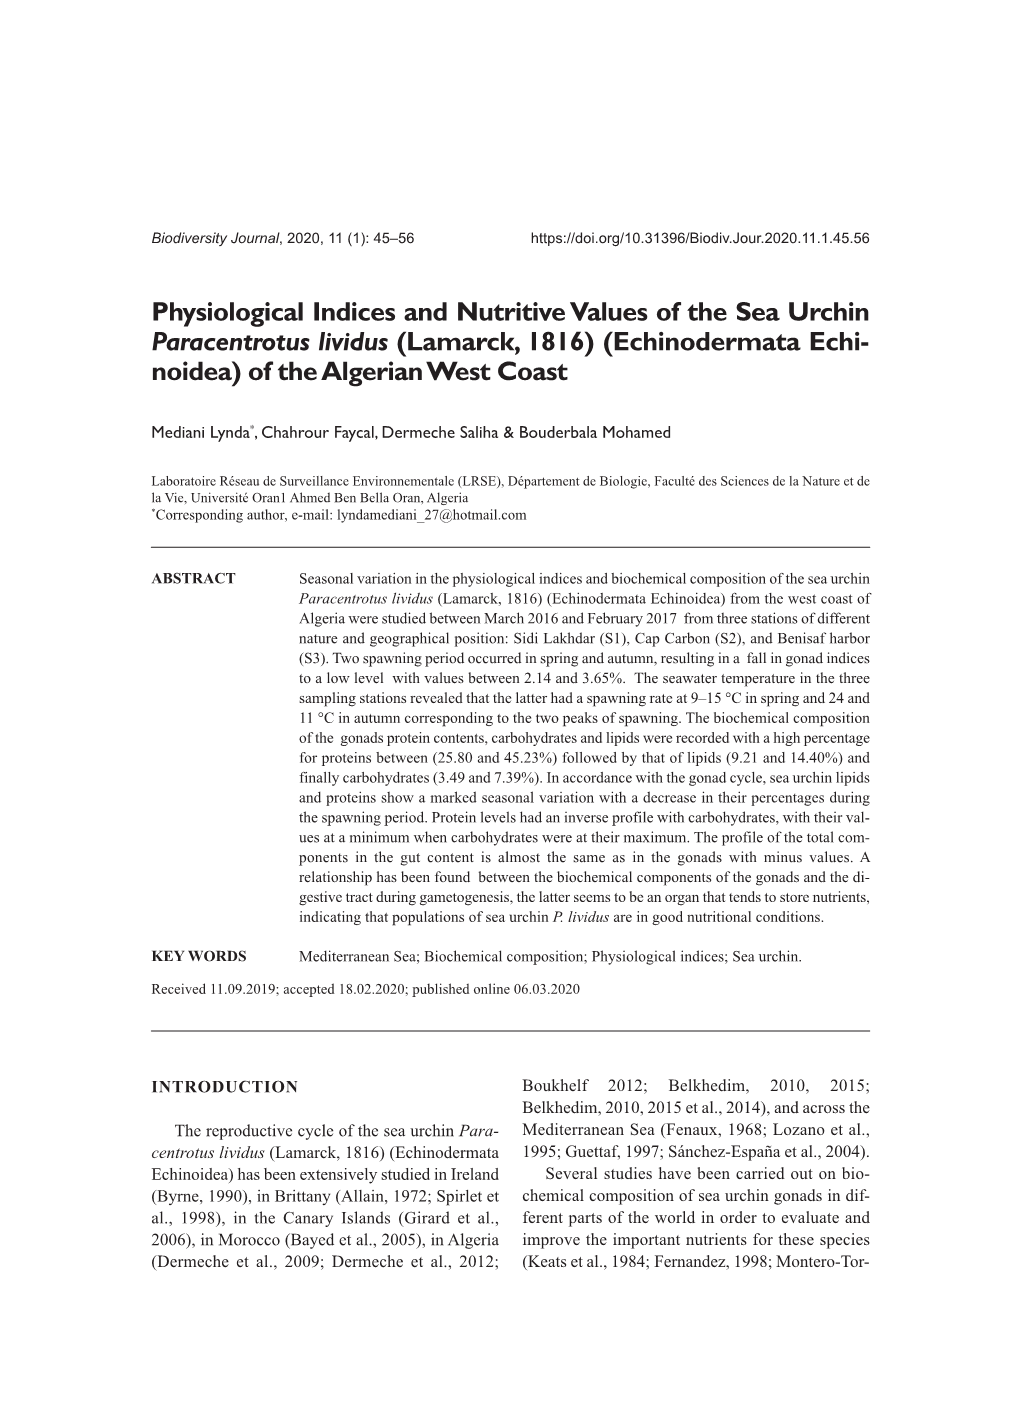 Physiological Indices and Nutritive Values of the Sea Urchin Paracentrotus Lividus (Lamarck, 1816) (Echinodermata Echi- Noidea) of the Algerian West Coast